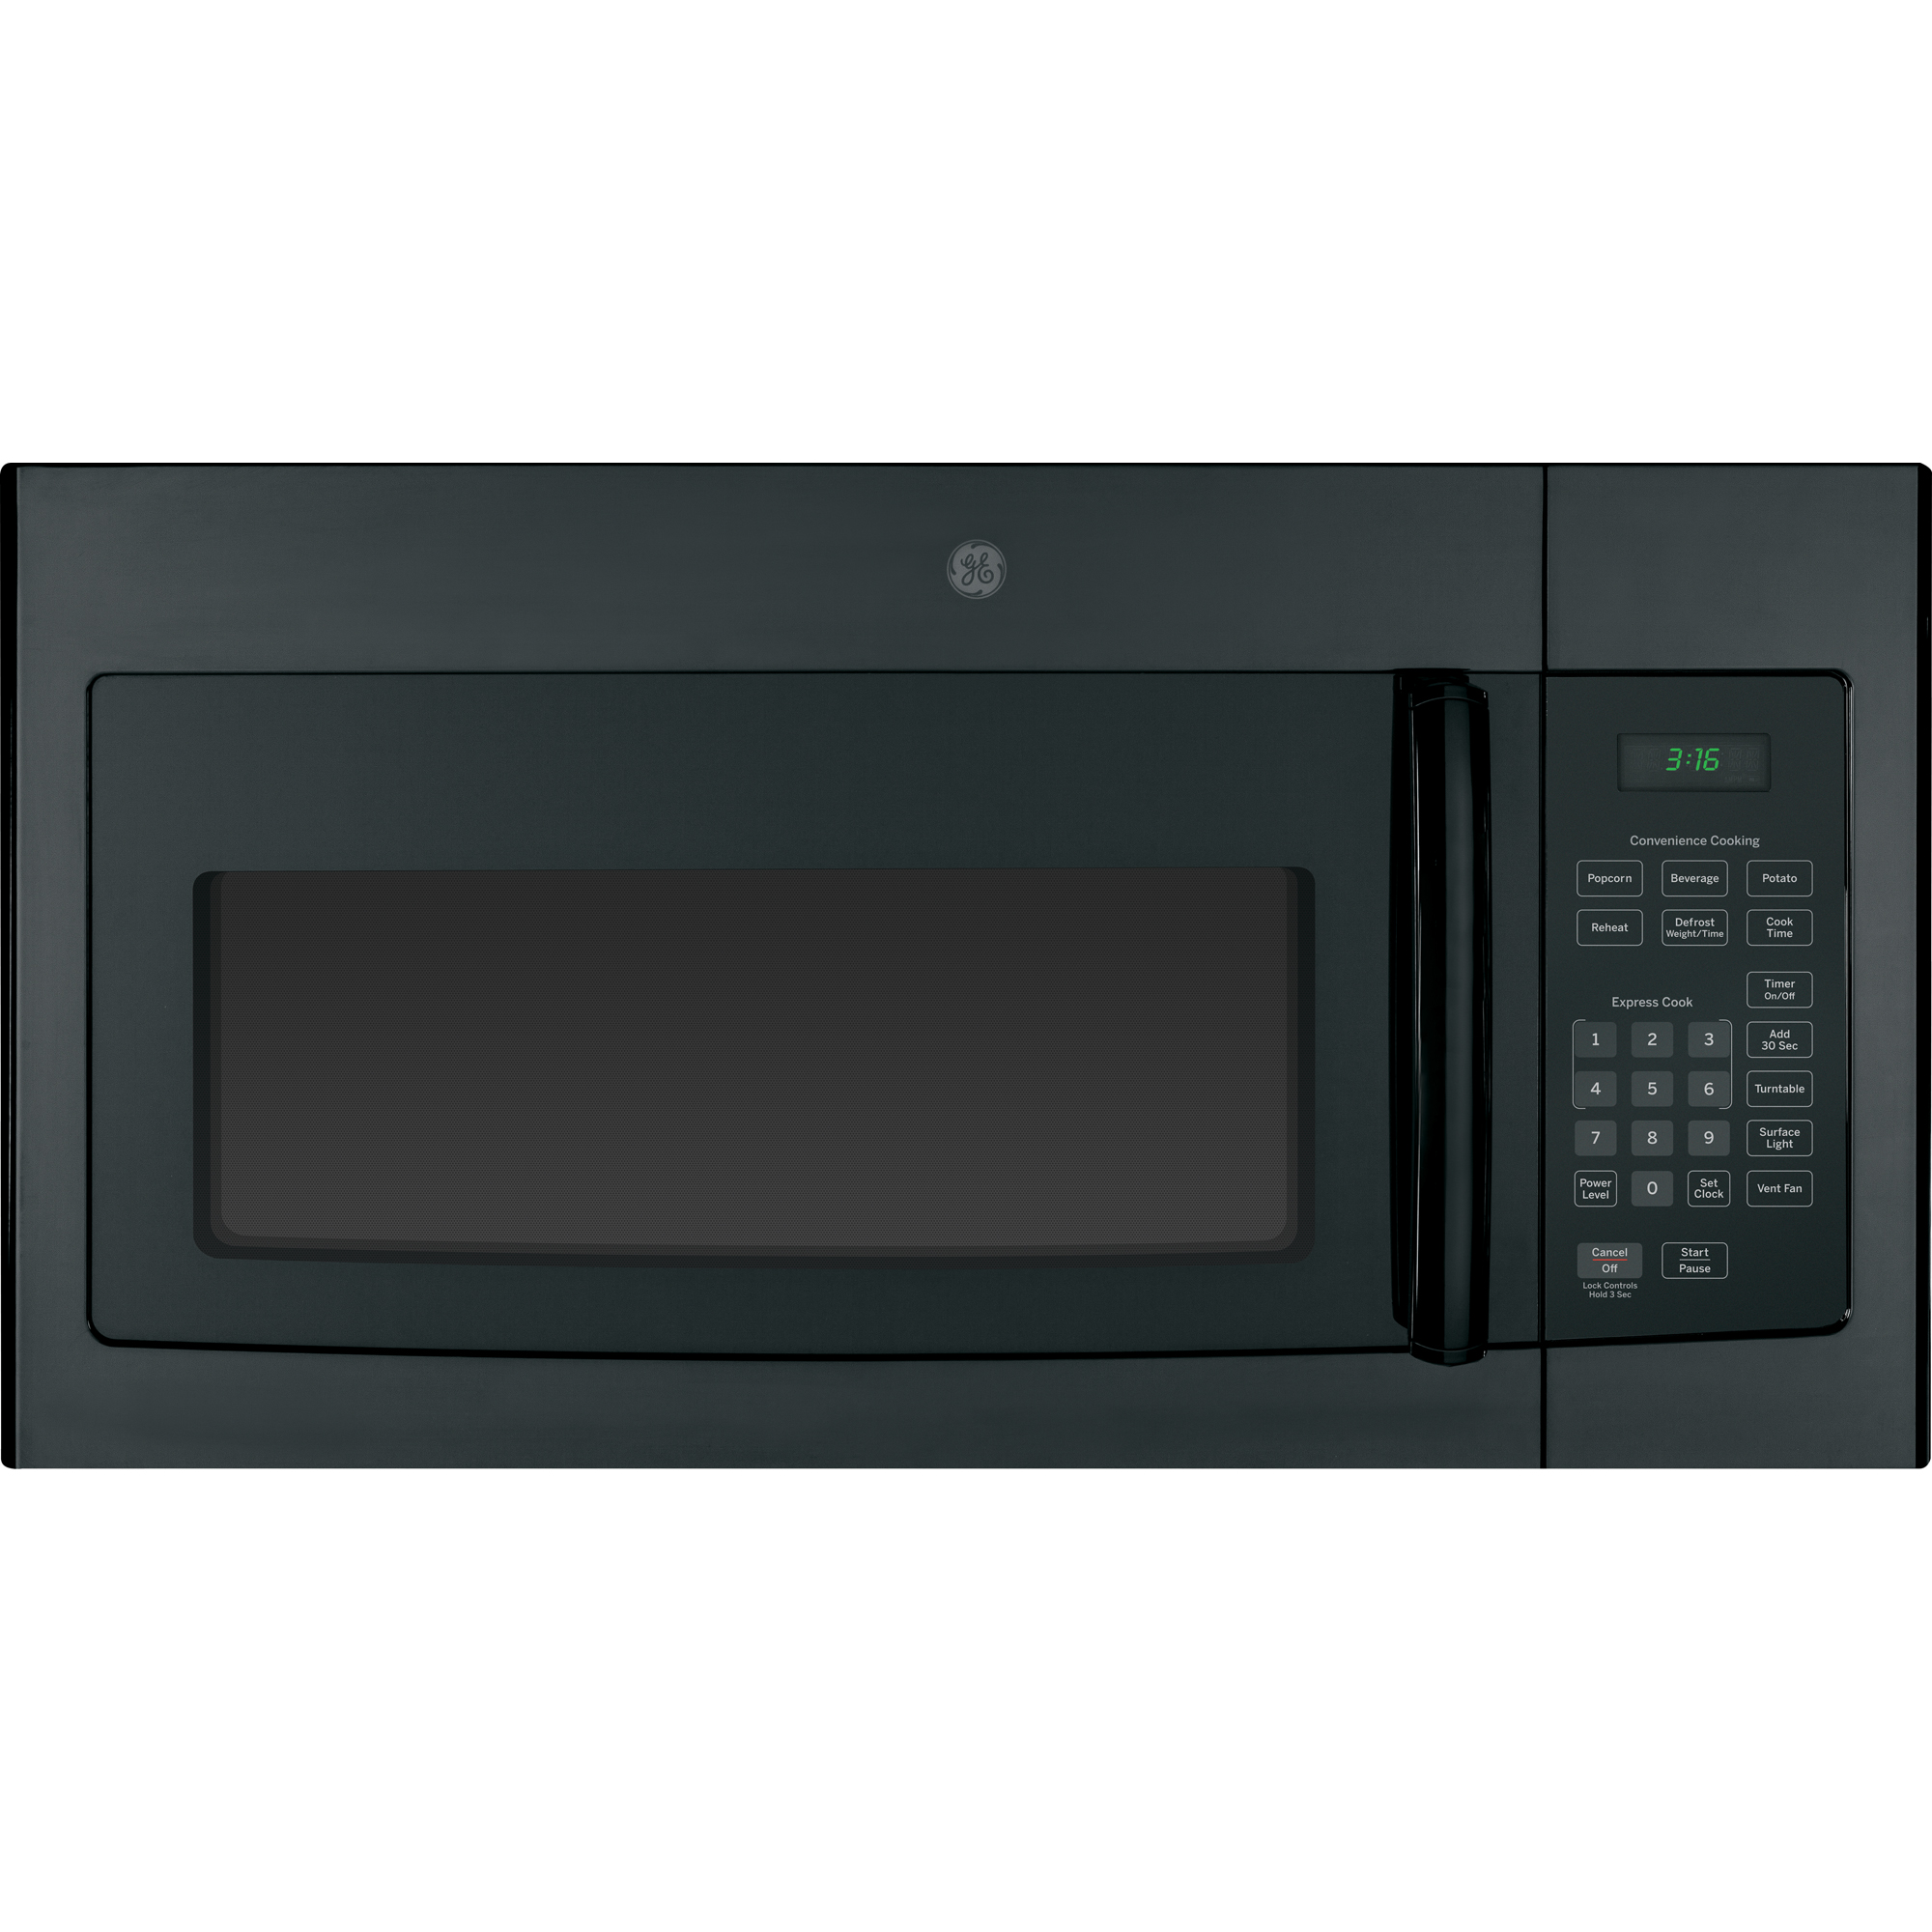 GE Appliances JVM3160DFBB 1.6 cu. ft. Over-the-Range Microwave Oven - Black